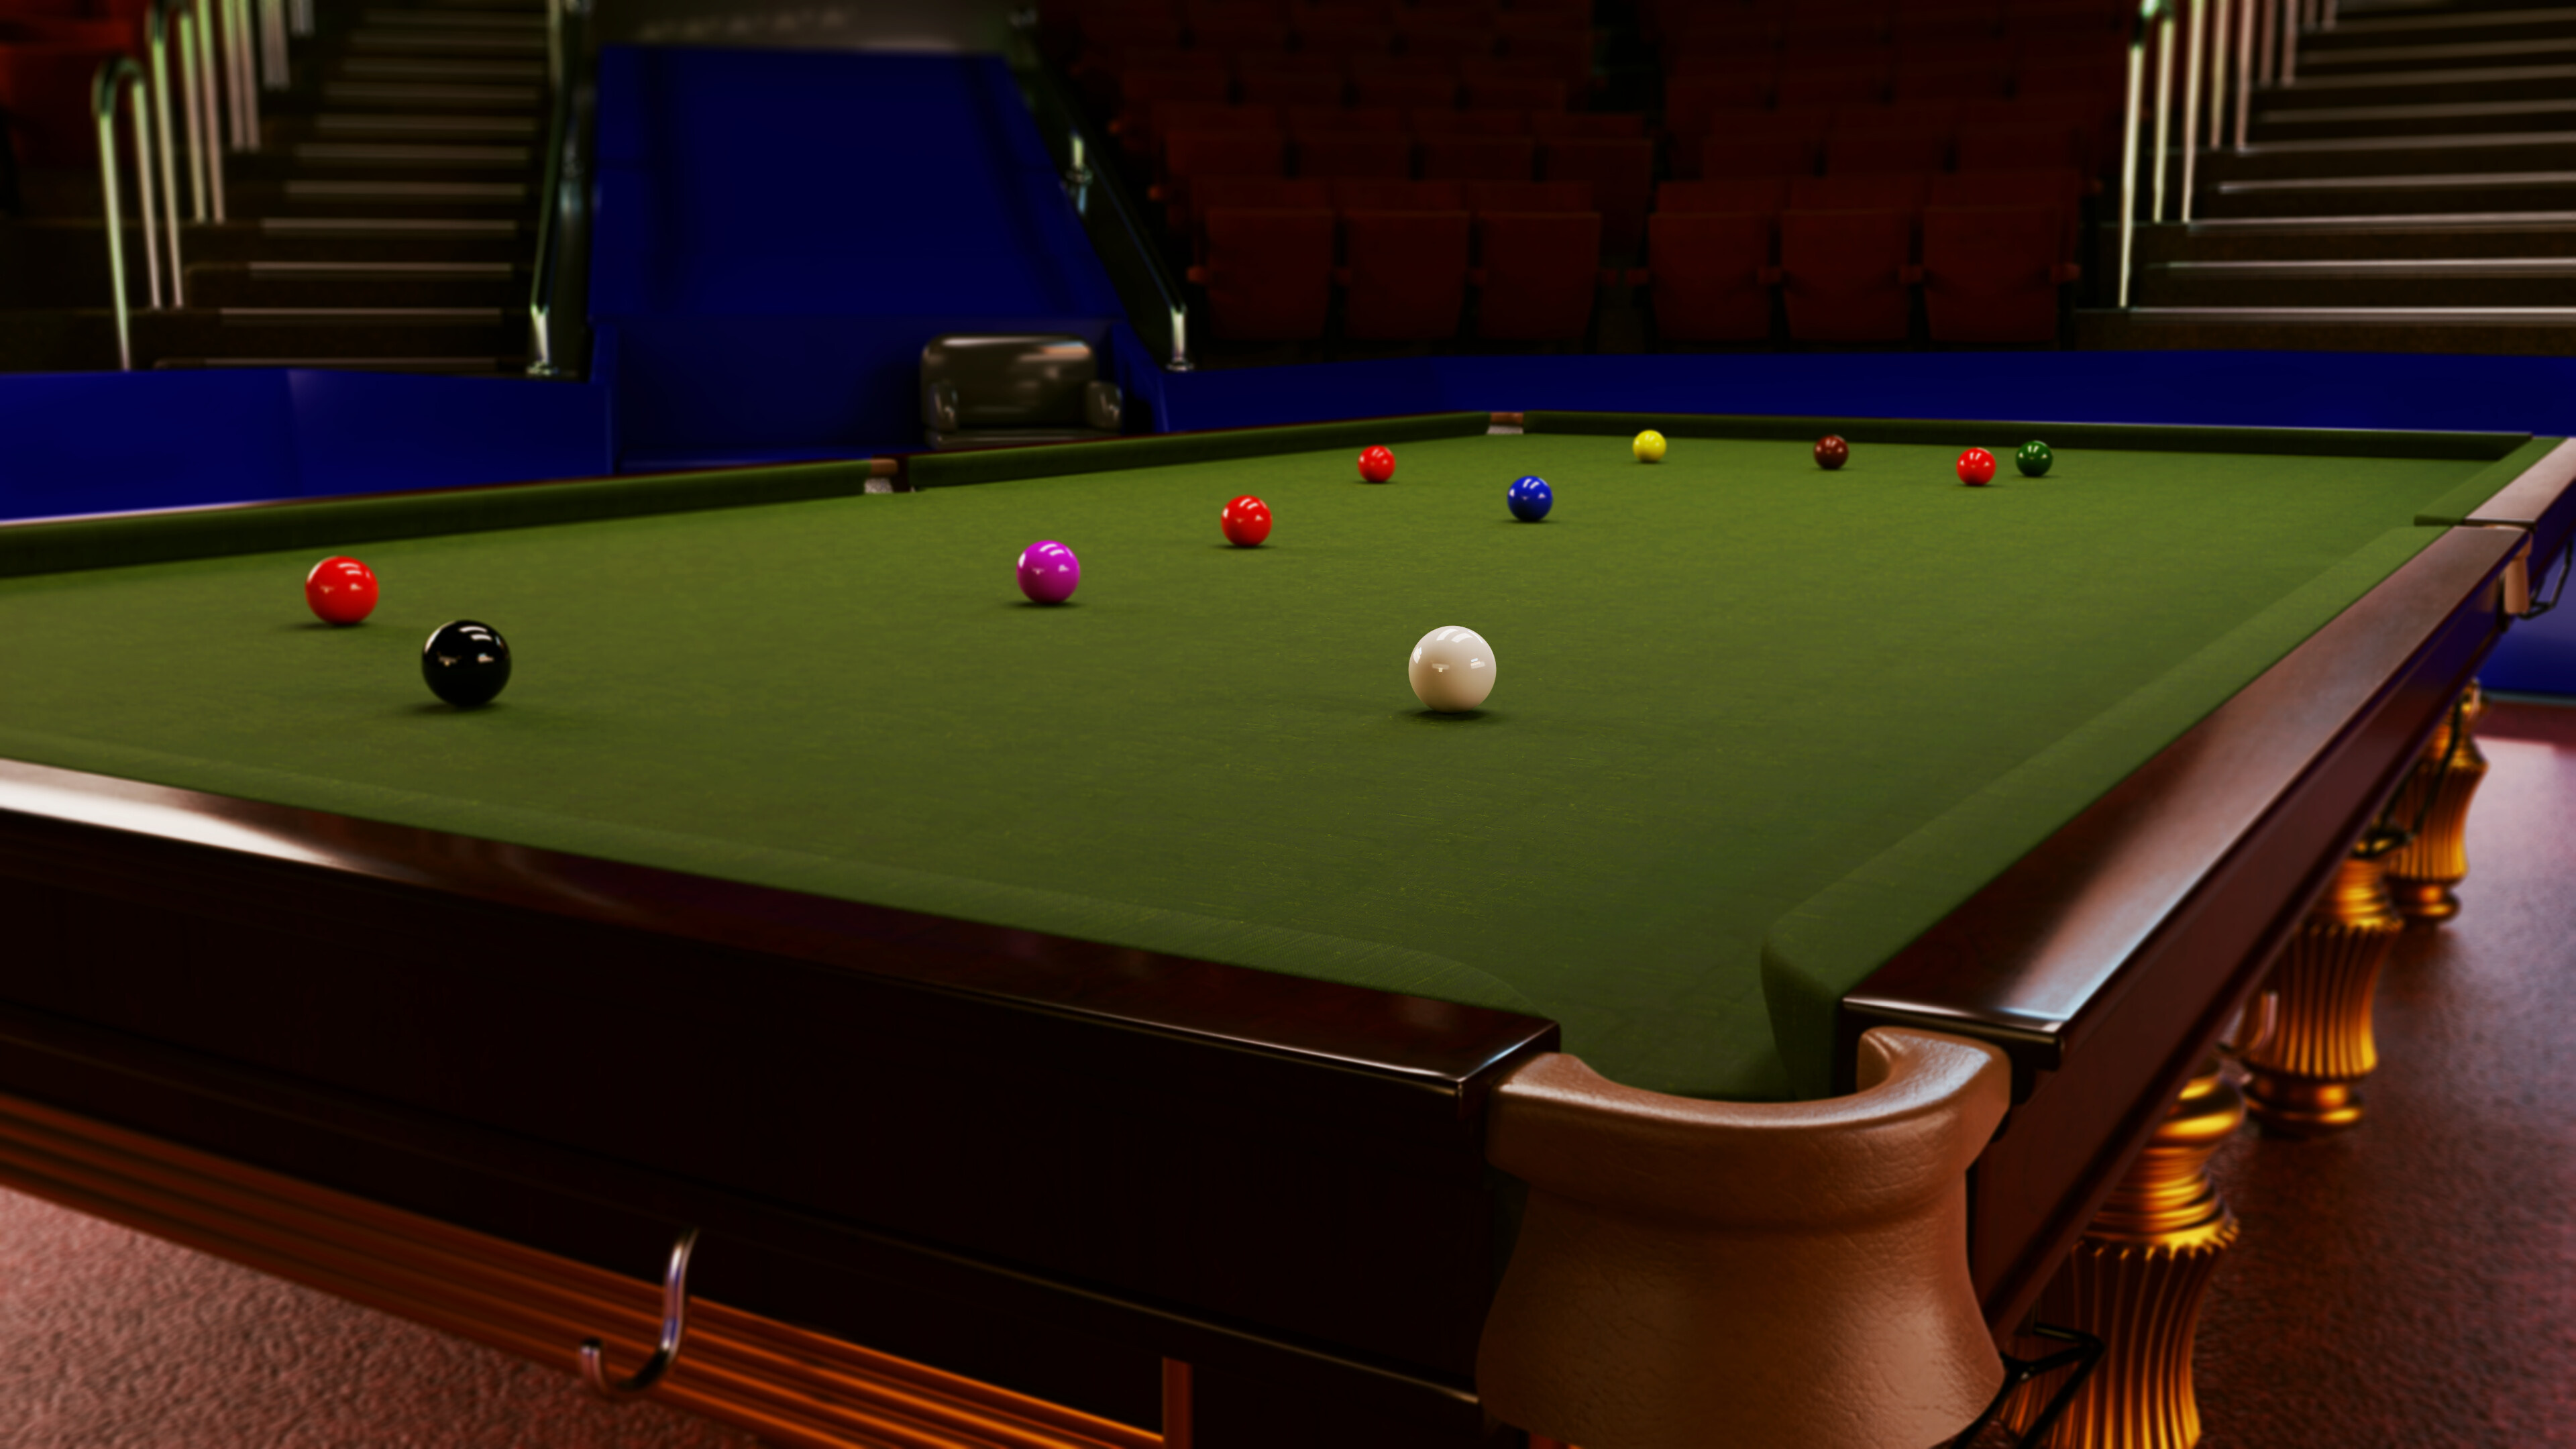 Snooker table projects, Blender artists community, Finished snooker table, Sports, 3840x2160 4K Desktop